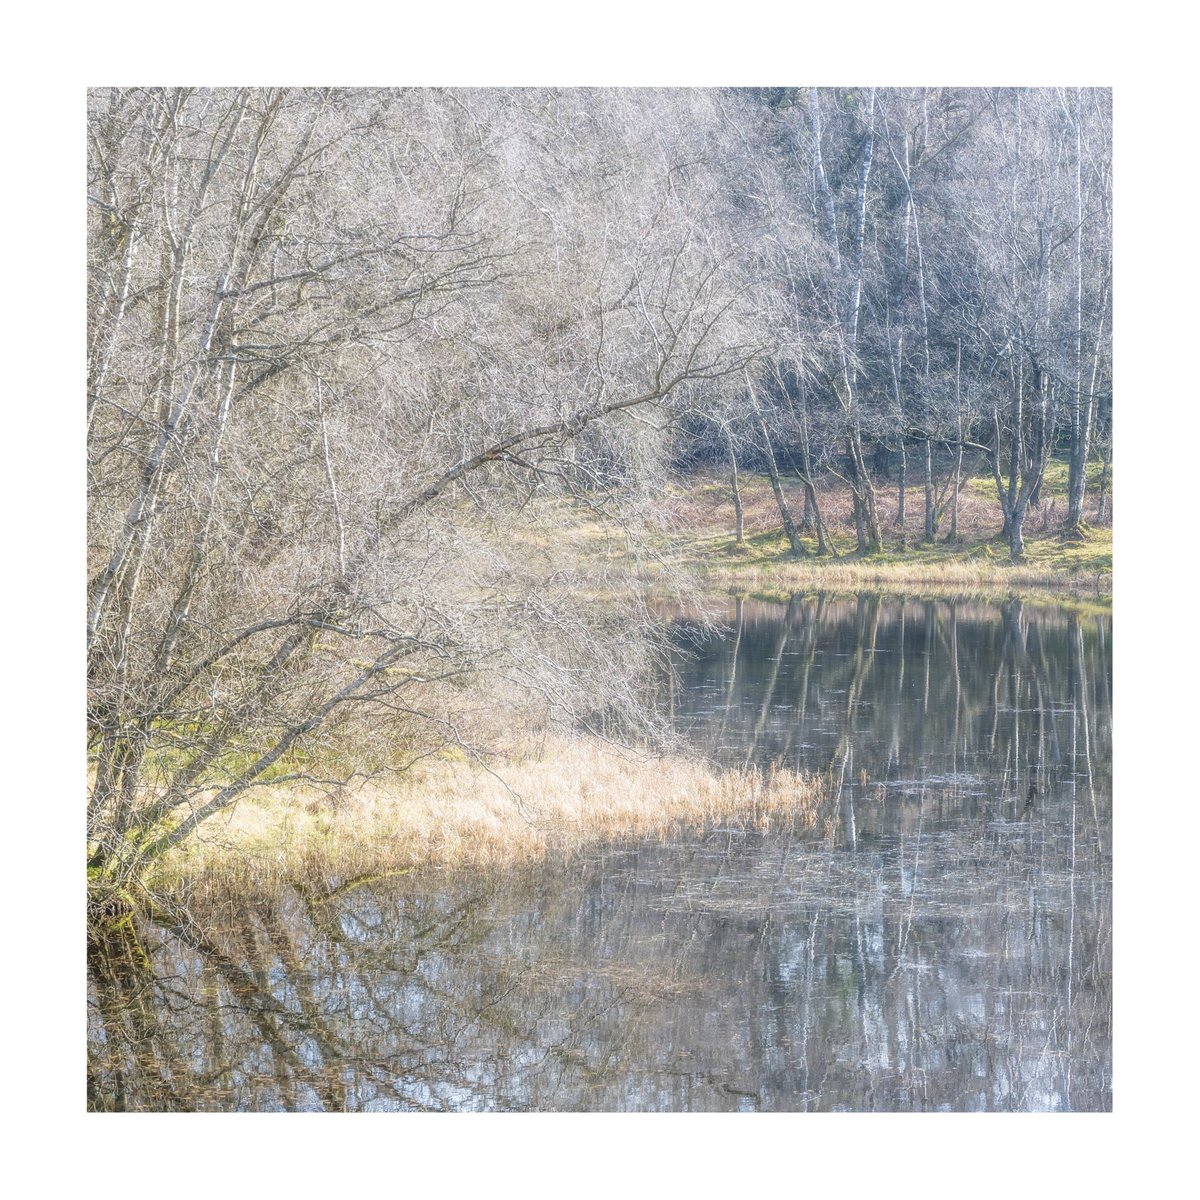 Whispering waters 

9 grid on the way to celebrate the changing of seasons. 

@nikoneurope @UKNikon #NikonUK #NikonZ7 @benrouk #nisiuk  @nisiglobal
#appicoftheweek #nikoneurope
#landscape #moody_nature
#photographer